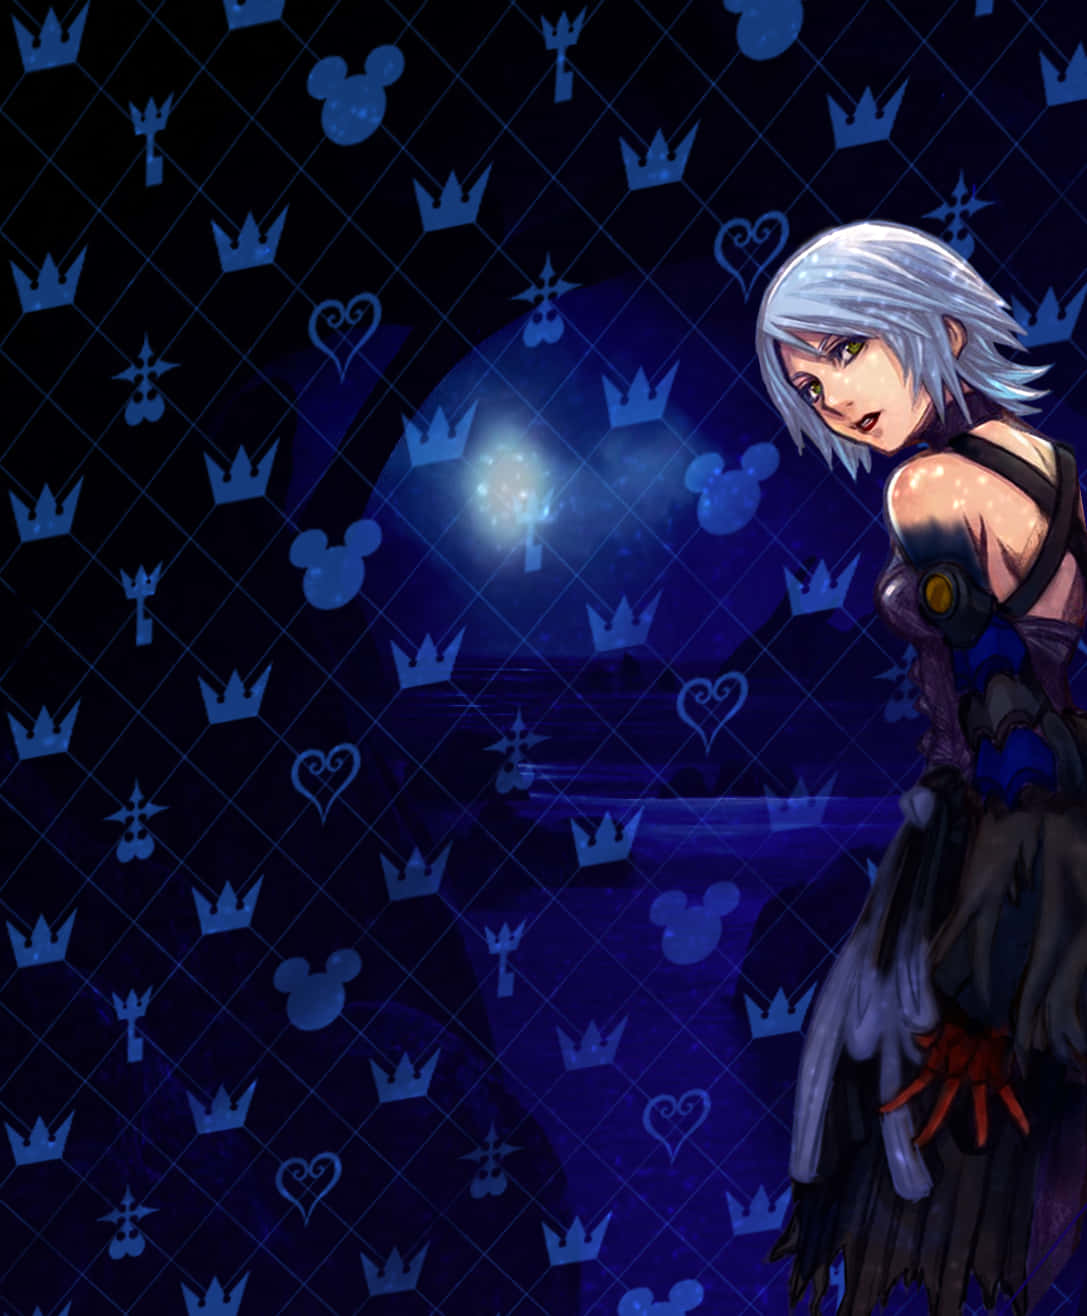 Epic Adventure in Kingdom Hearts with Aqua Wallpaper